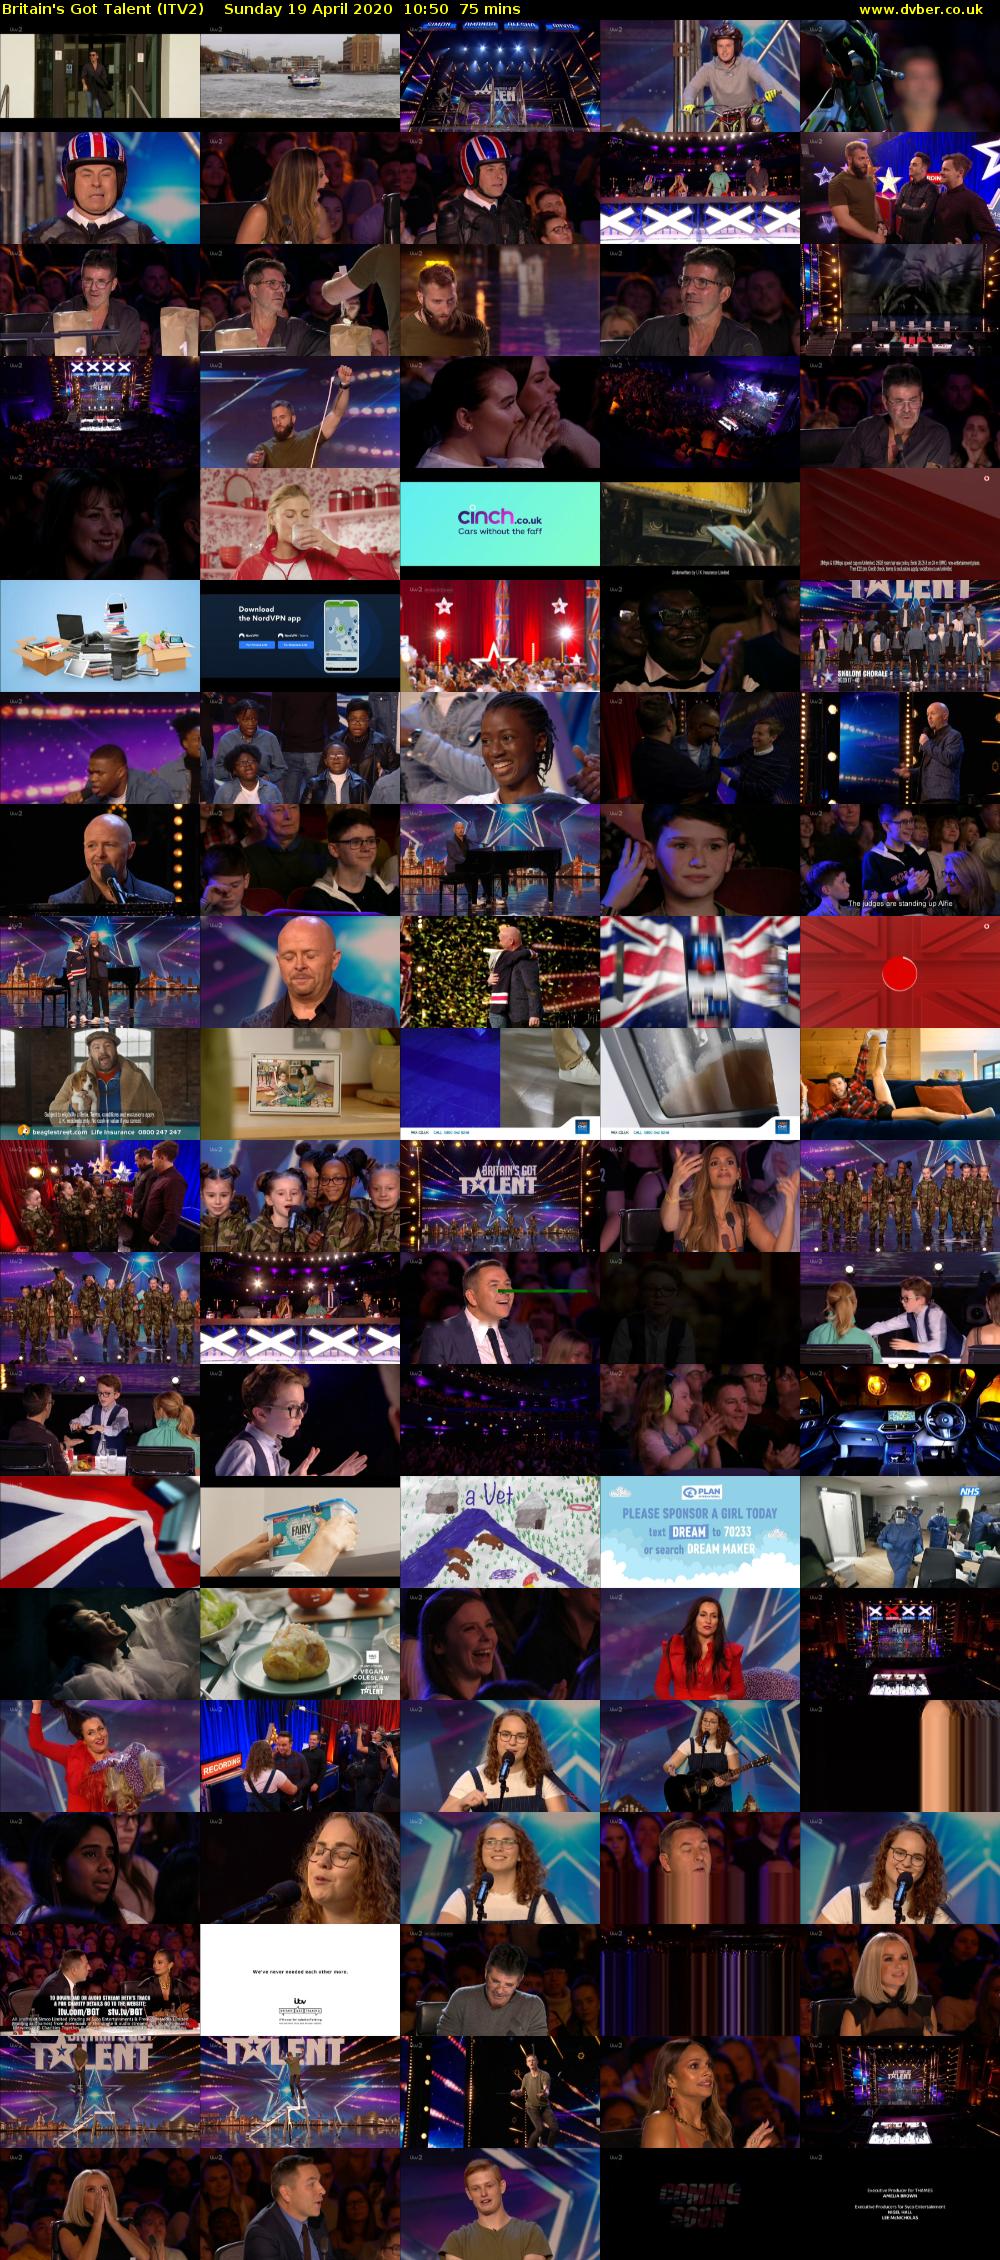 Britain's Got Talent (ITV2) Sunday 19 April 2020 10:50 - 12:05